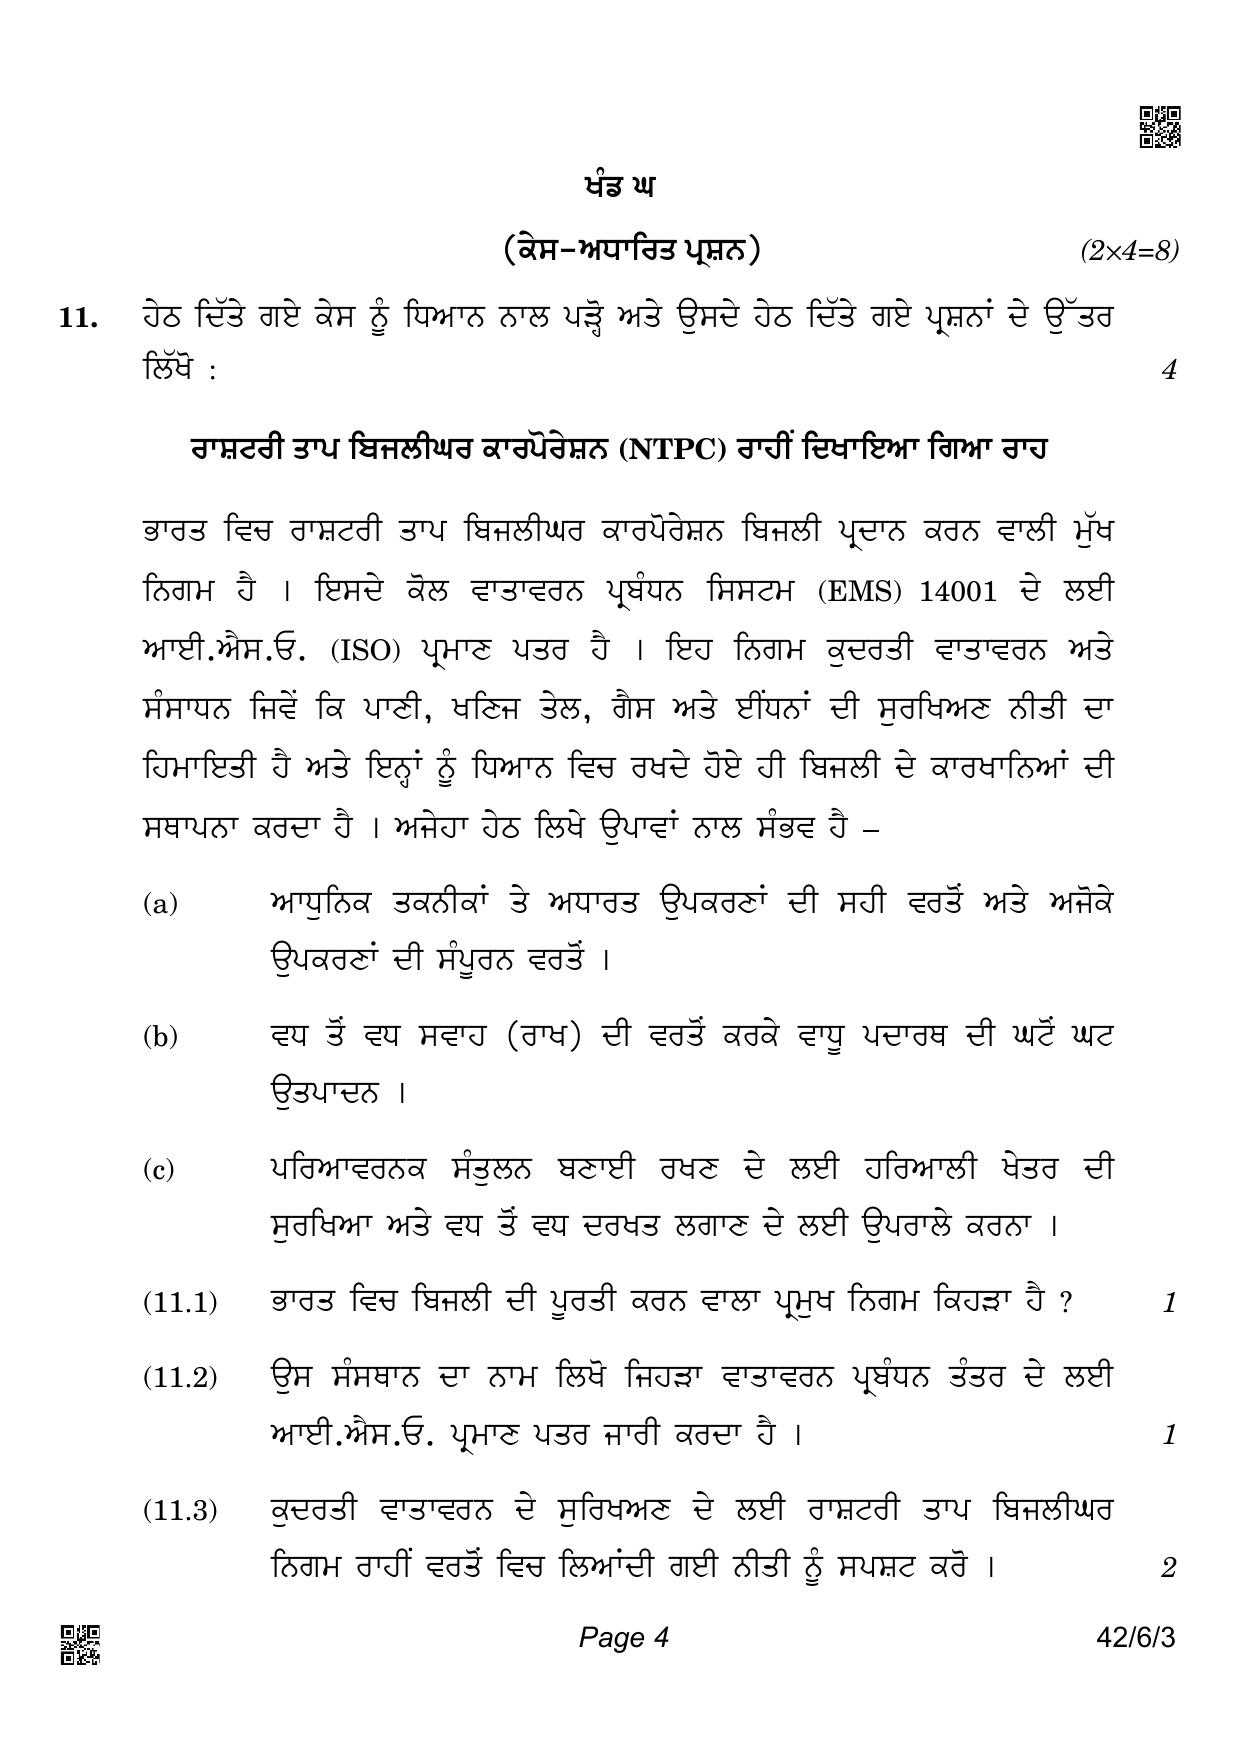 CBSE Class 10 42-6-3_Social Science Punjabi Version 2022 Compartment Question Paper - Page 4